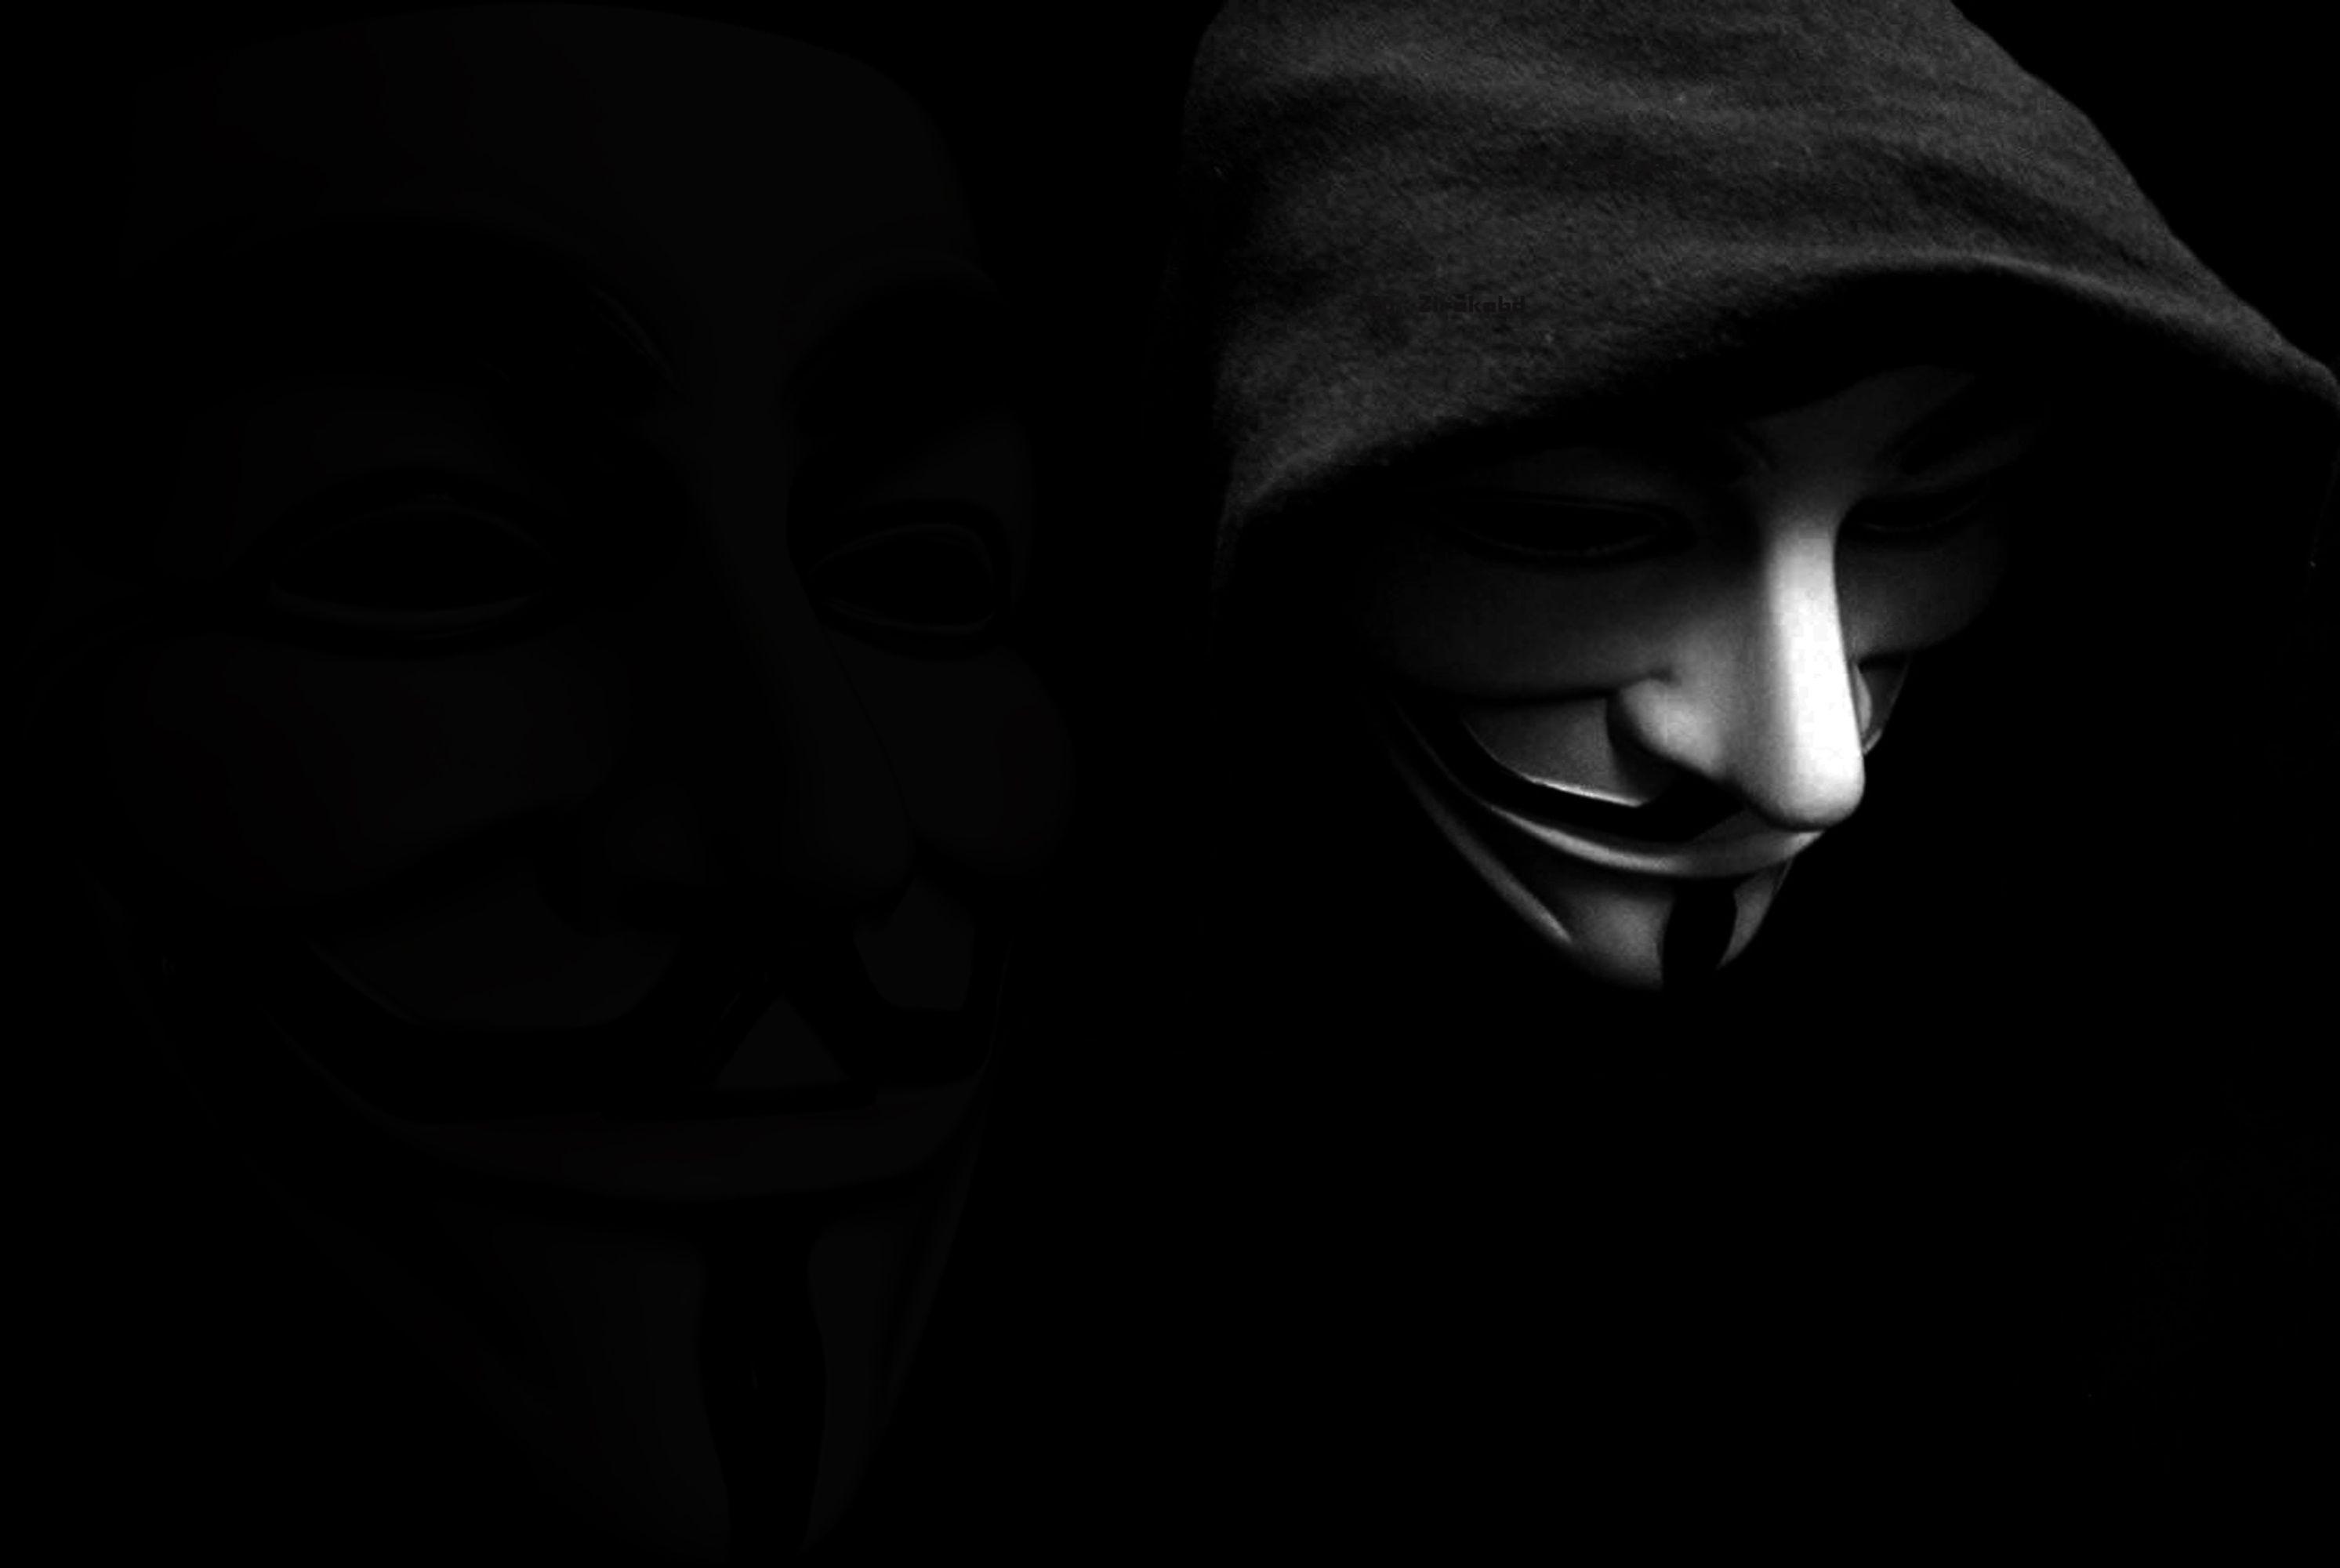 Image For > V For Vendetta Mask Wallpapers 1080p